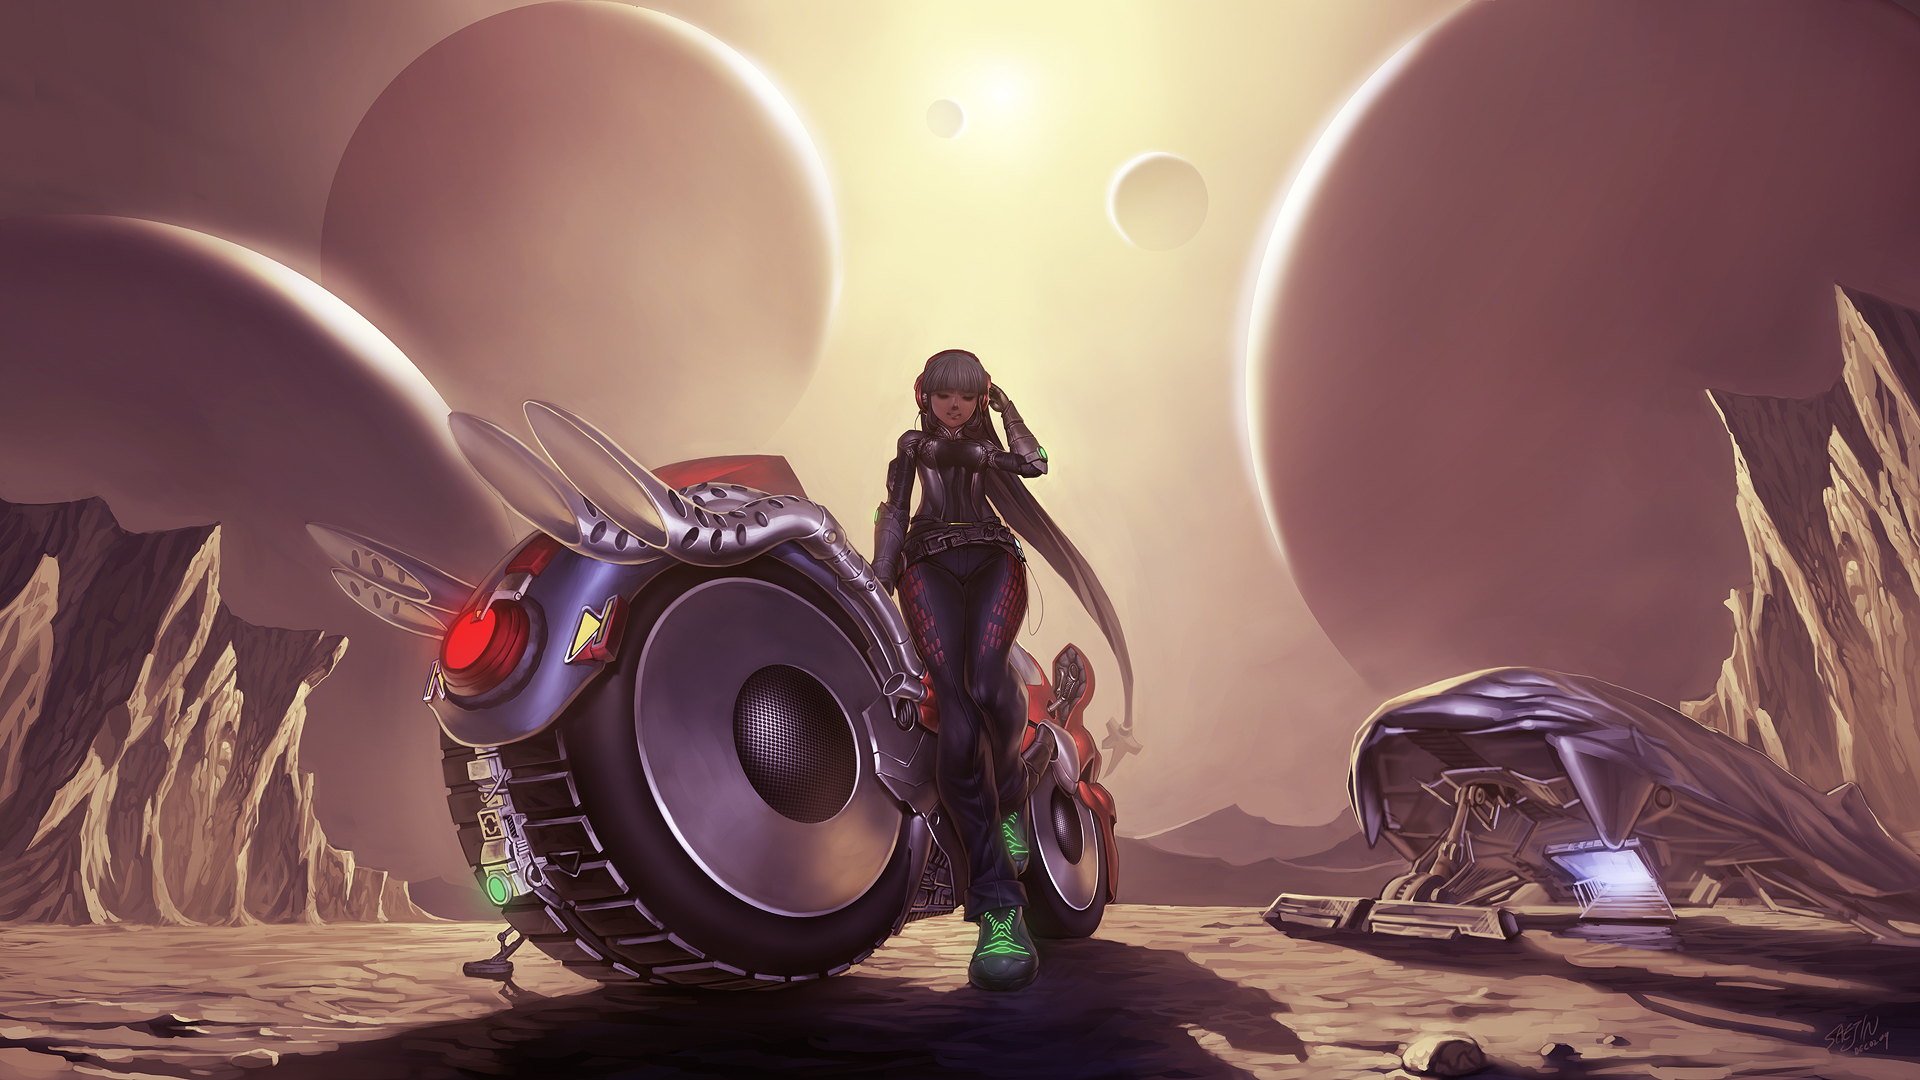 Wallpaper Motorcycle Blonde Girl Alien Planet - Concept Art Spaceship Fantasy Art - HD Wallpaper 